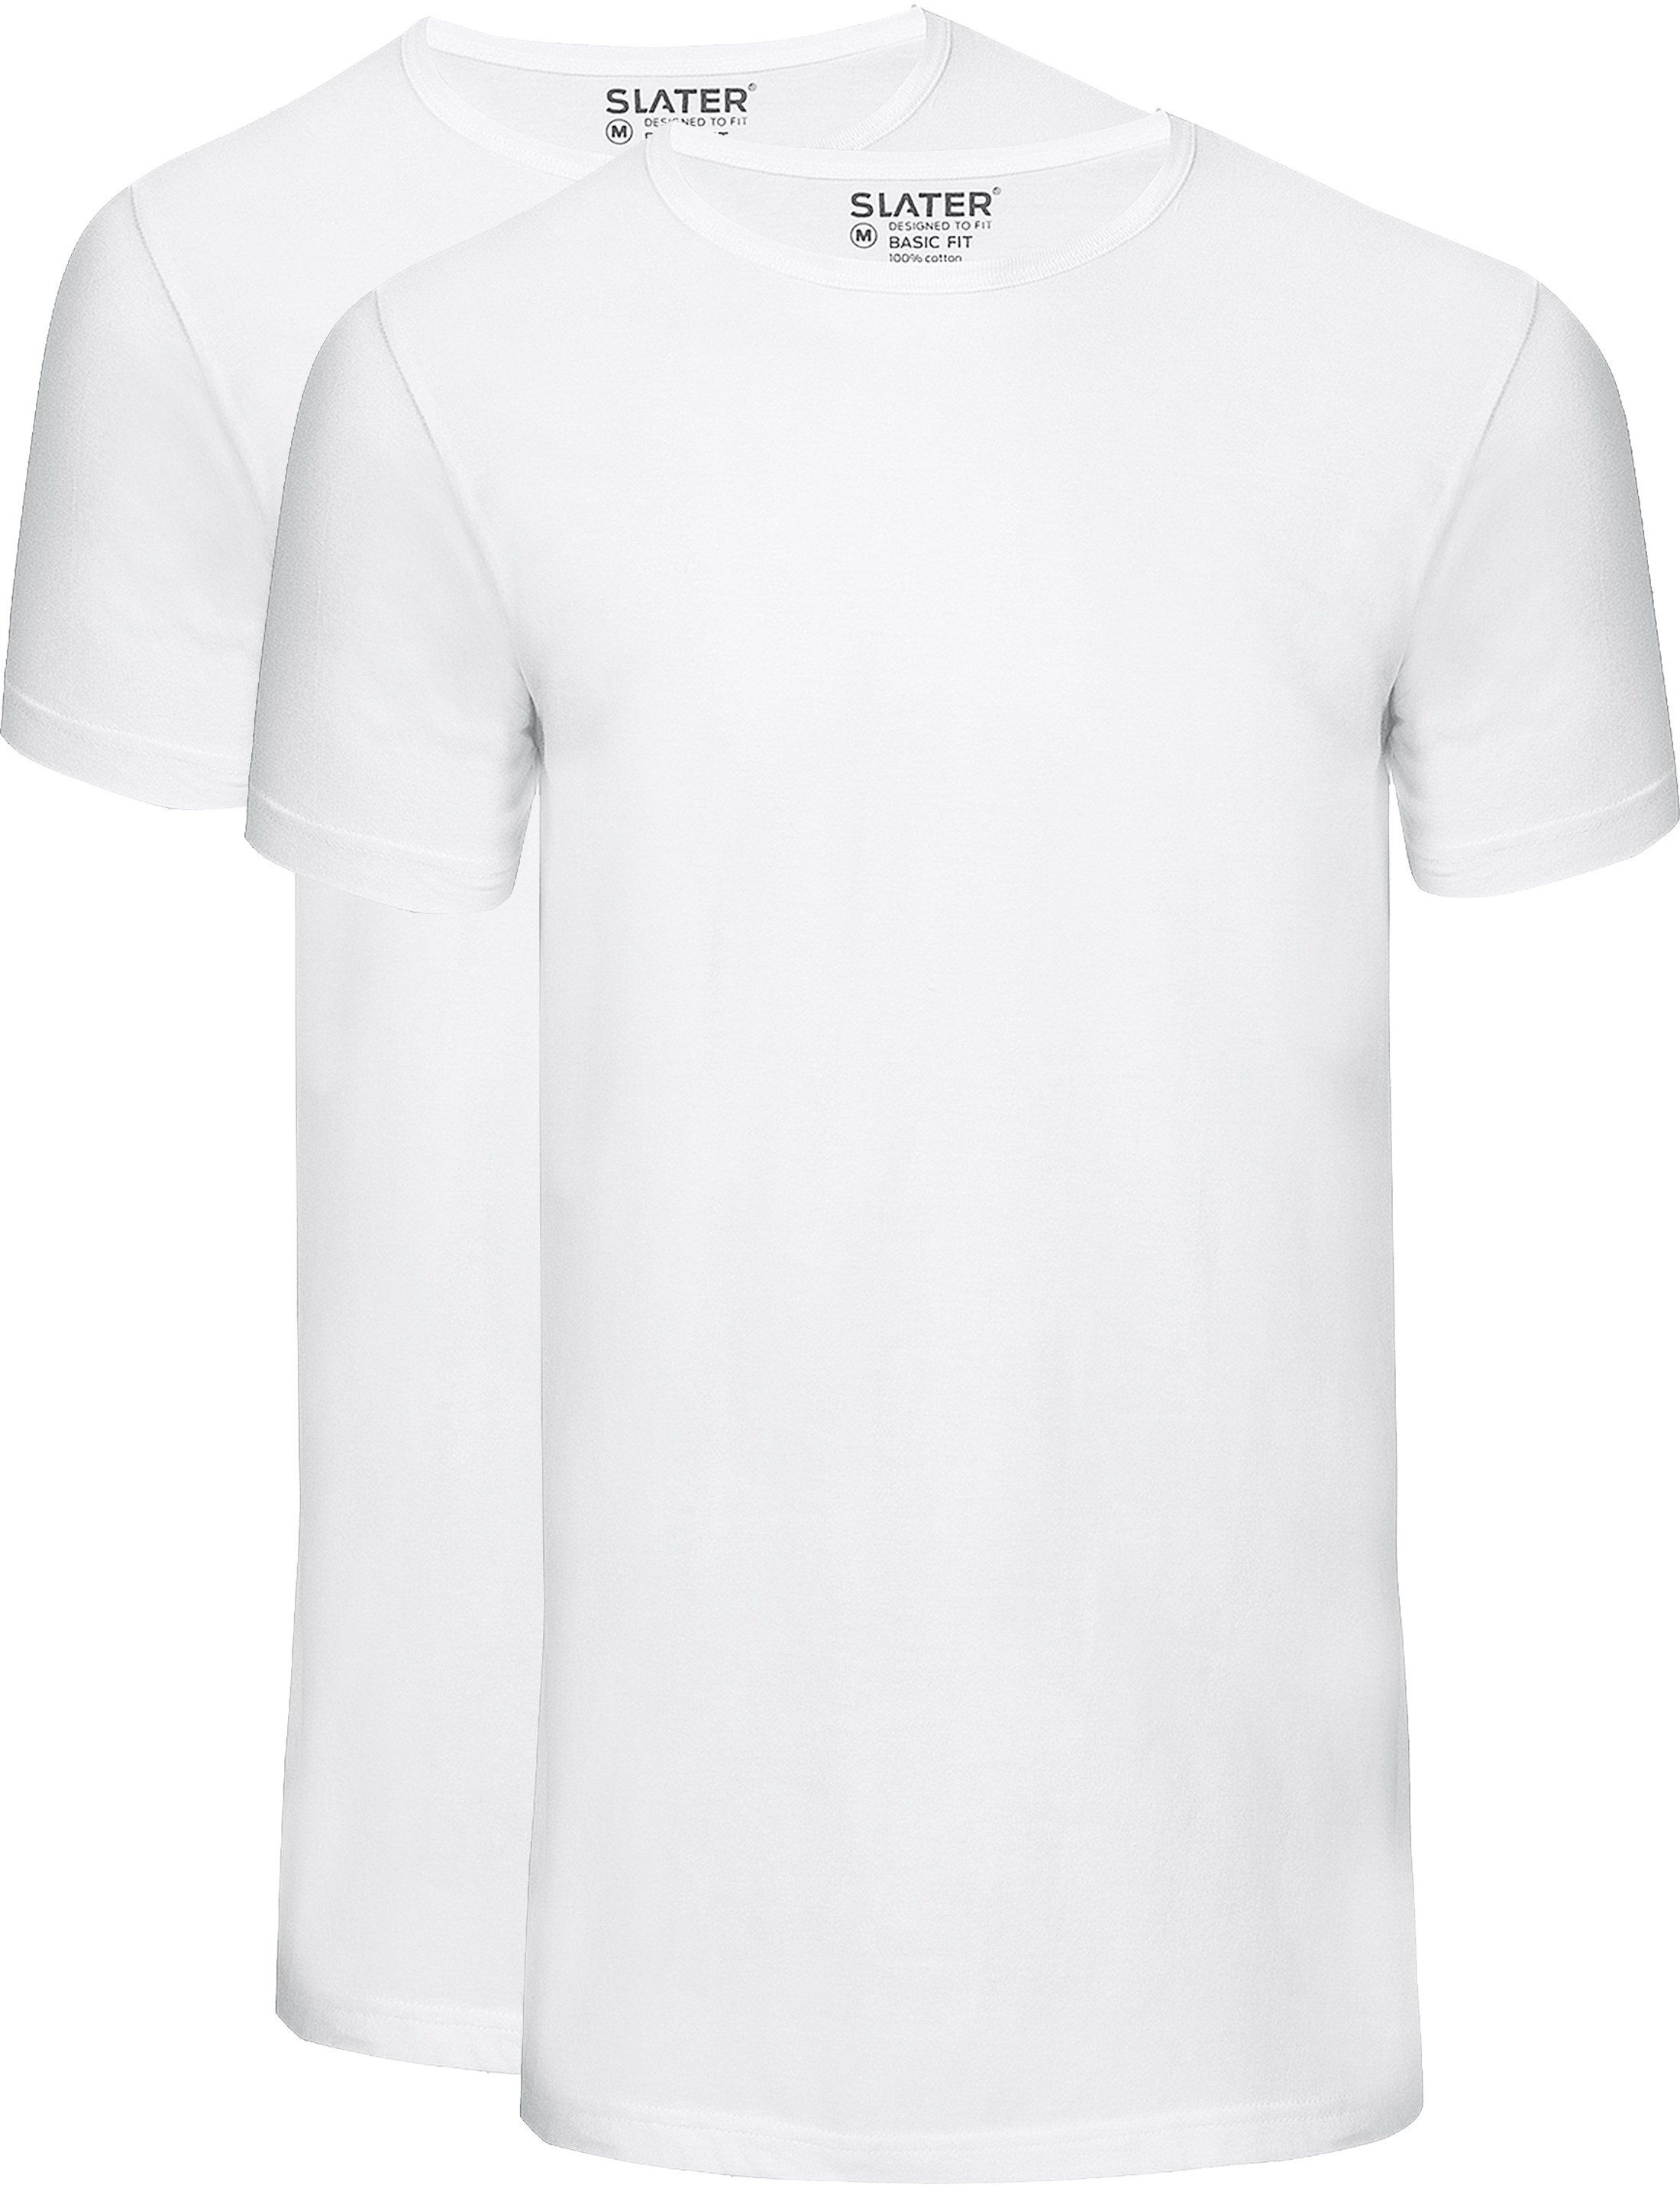 Slater 2-pack Basic Fit T-shirt White size 3XL